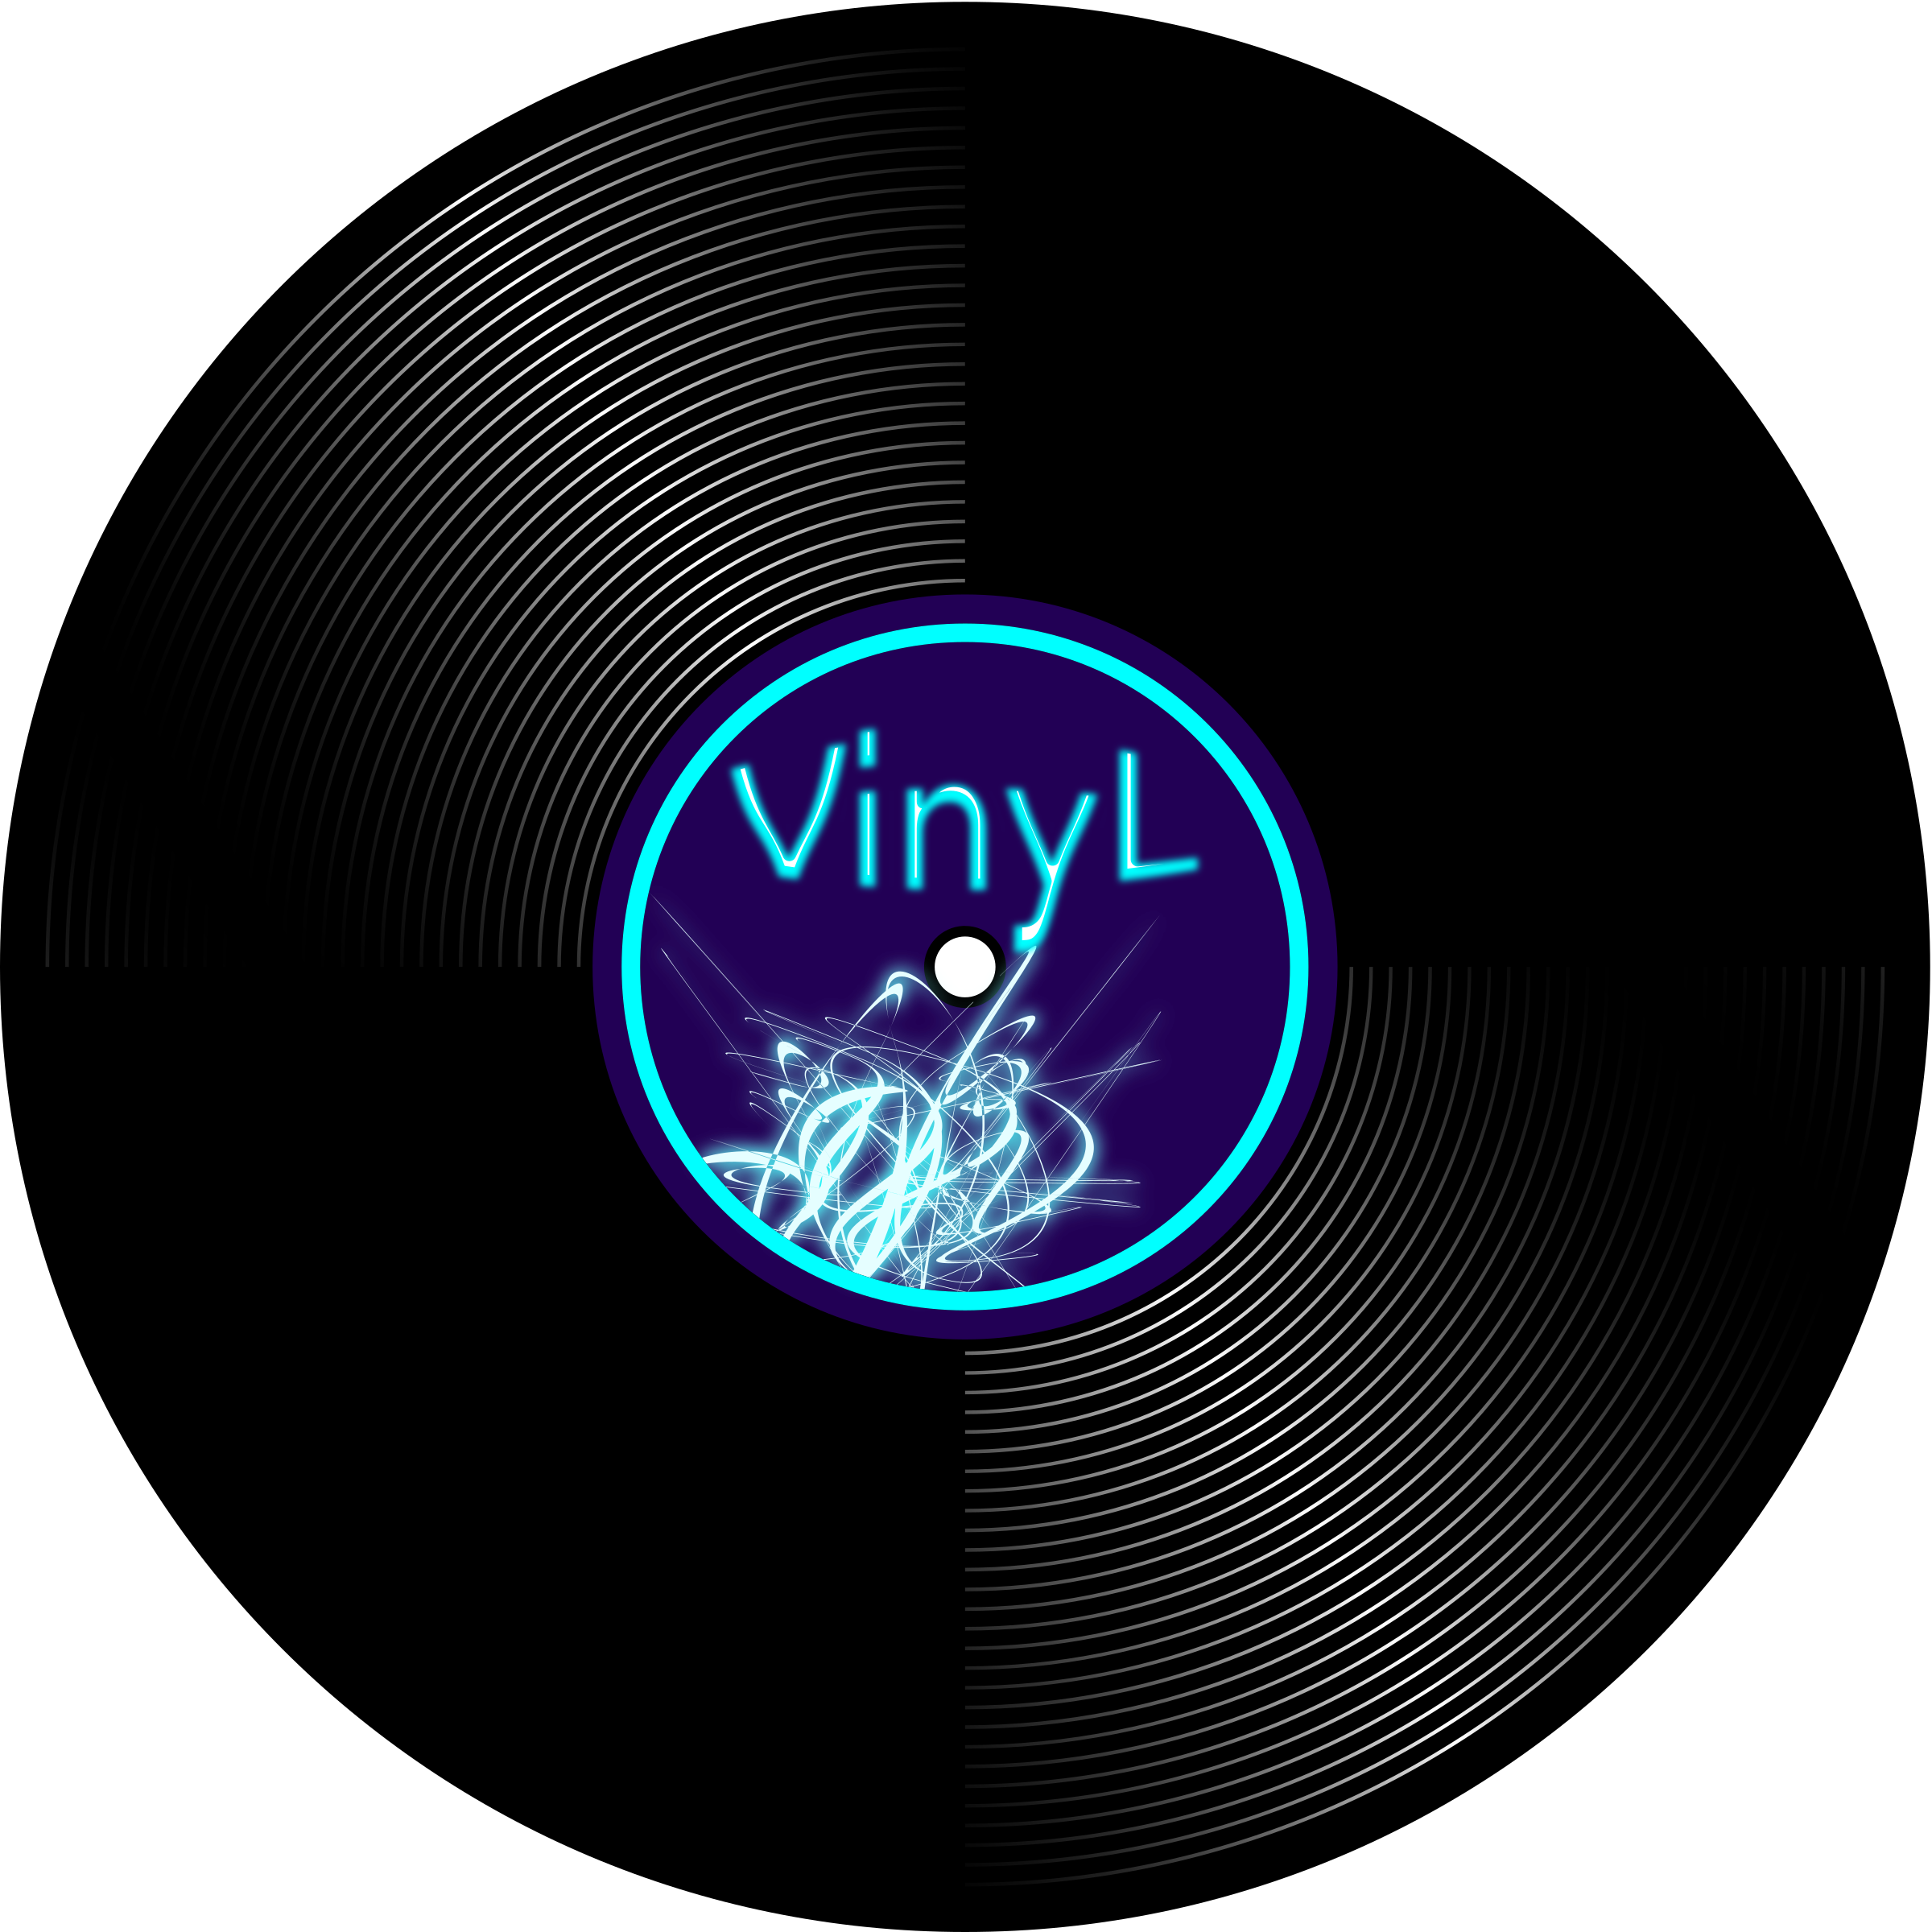 Vinyl Record Vector Graphics image - Free stock photo - Public Domain